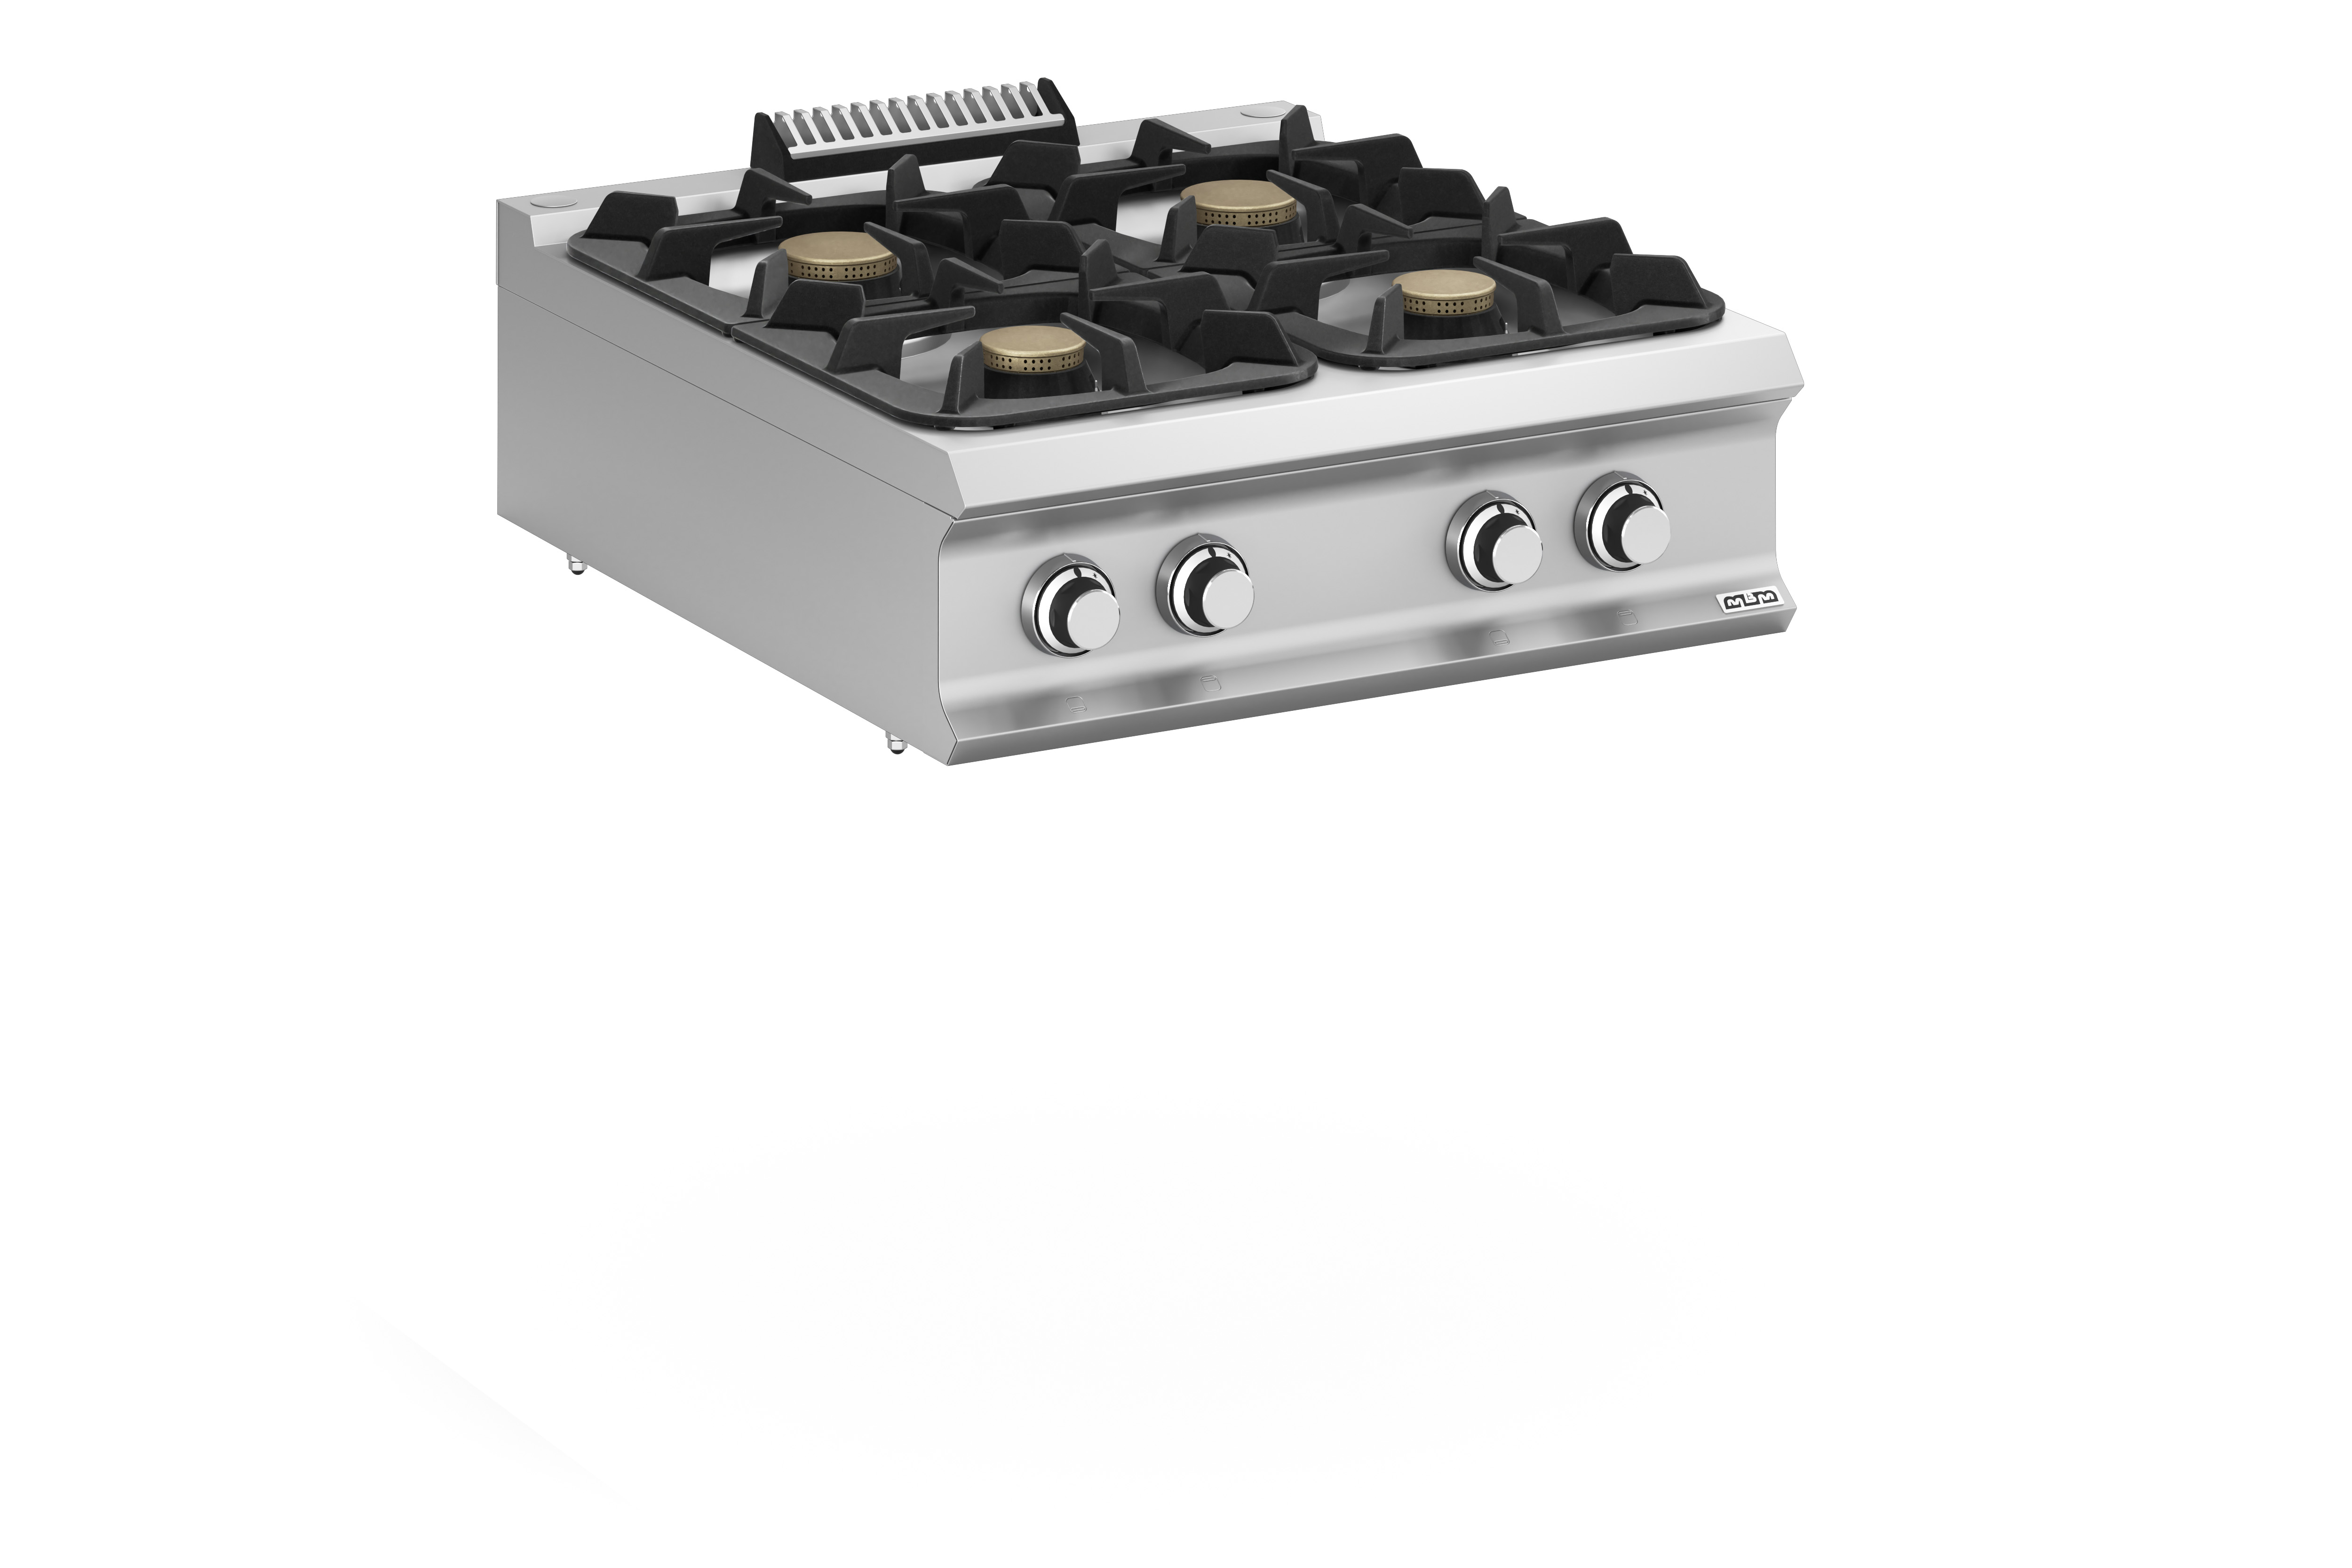 Domina Pro 900 FB98TXL 4 Powered Gas Cooker Countertop